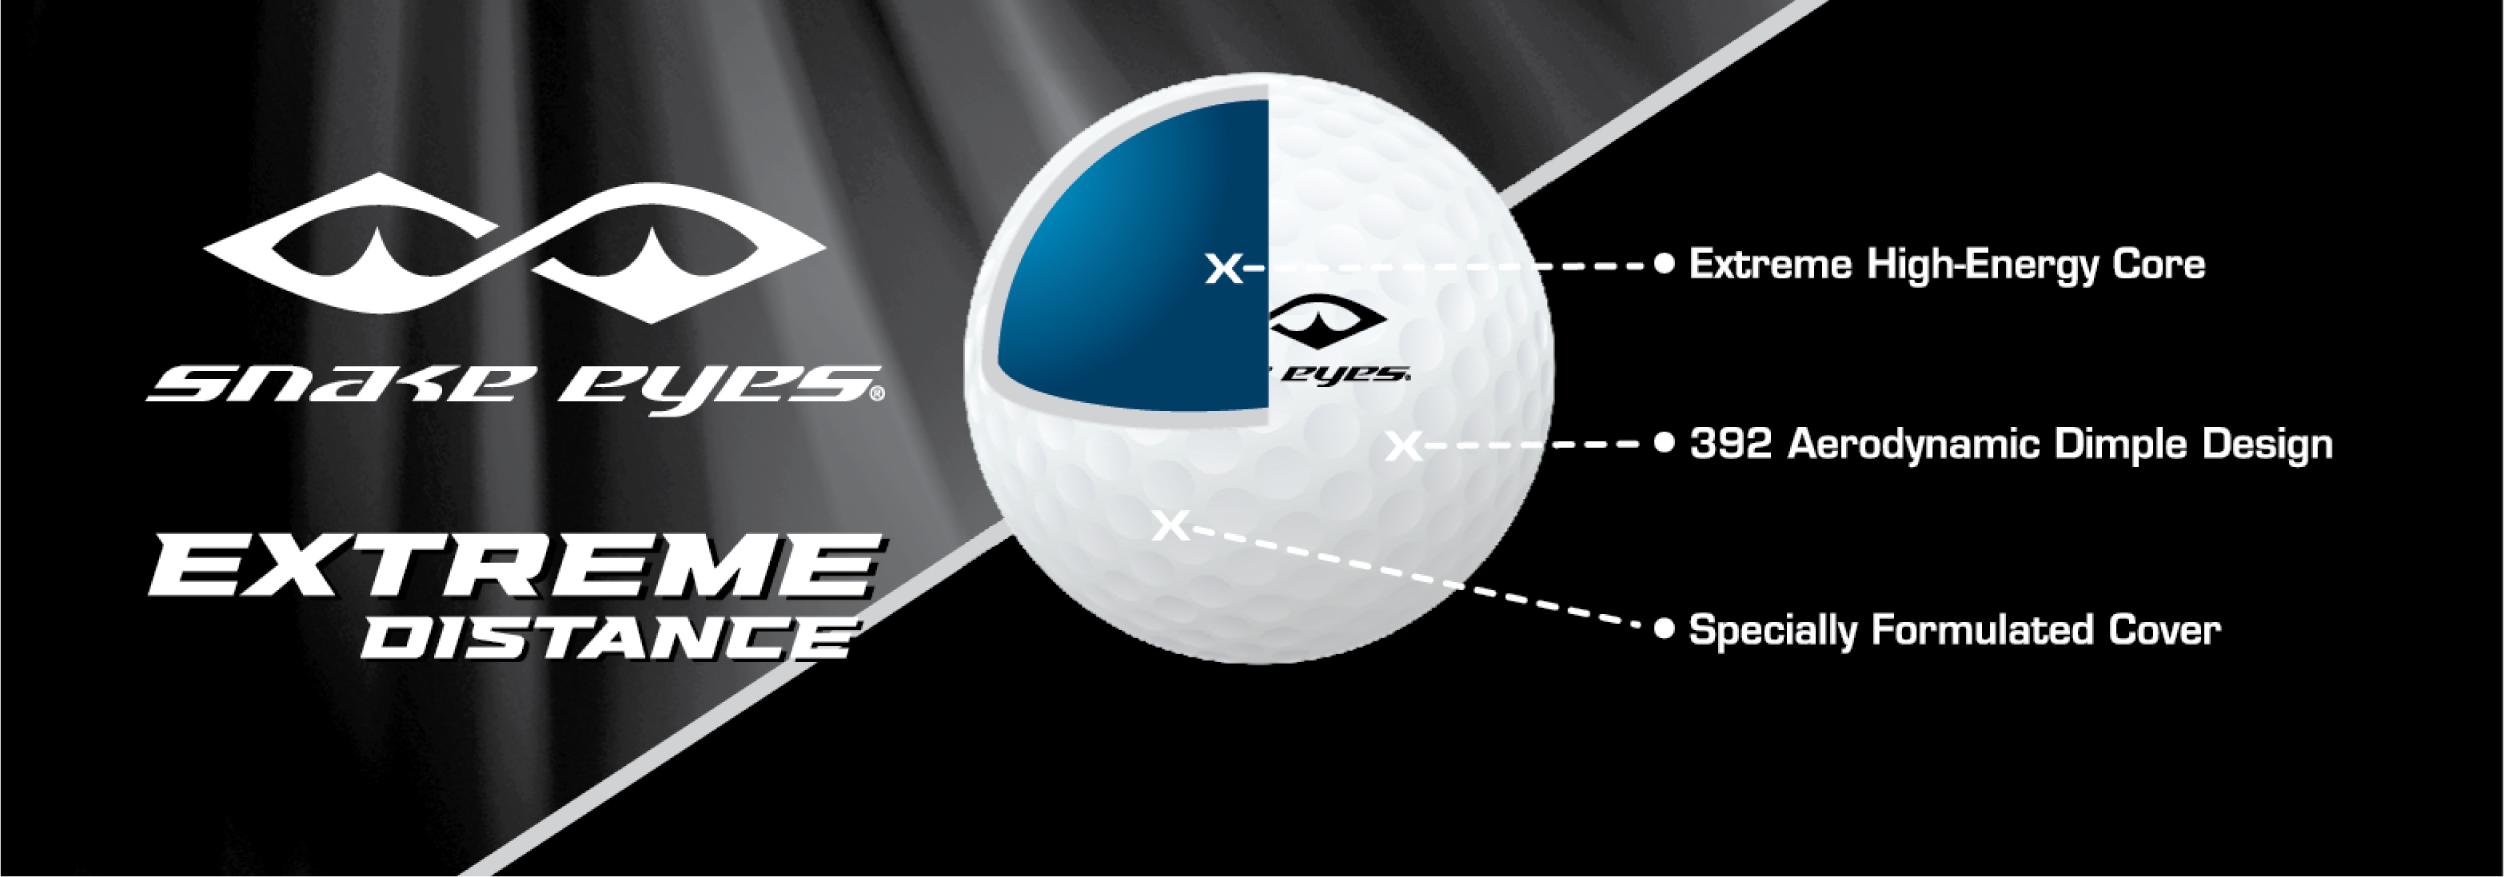 New Snake Eyes Extreme Distance Golf Balls 2